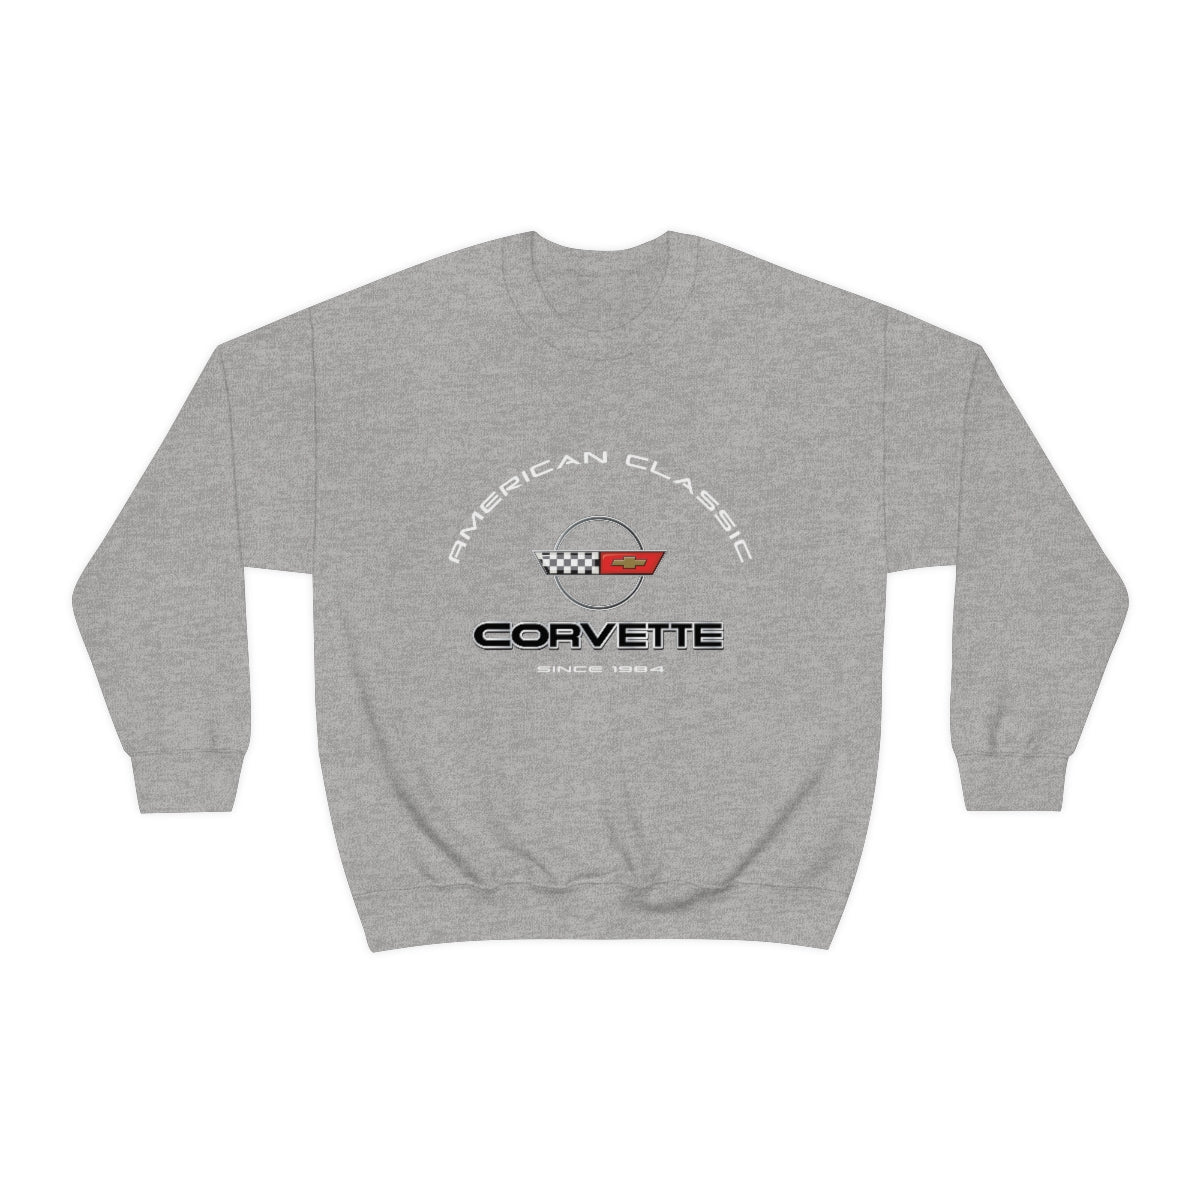 c4-corvette-crew-neck-long-sleave-heavy-duty-sweatshirt-perfect-for-cool-crisp-days